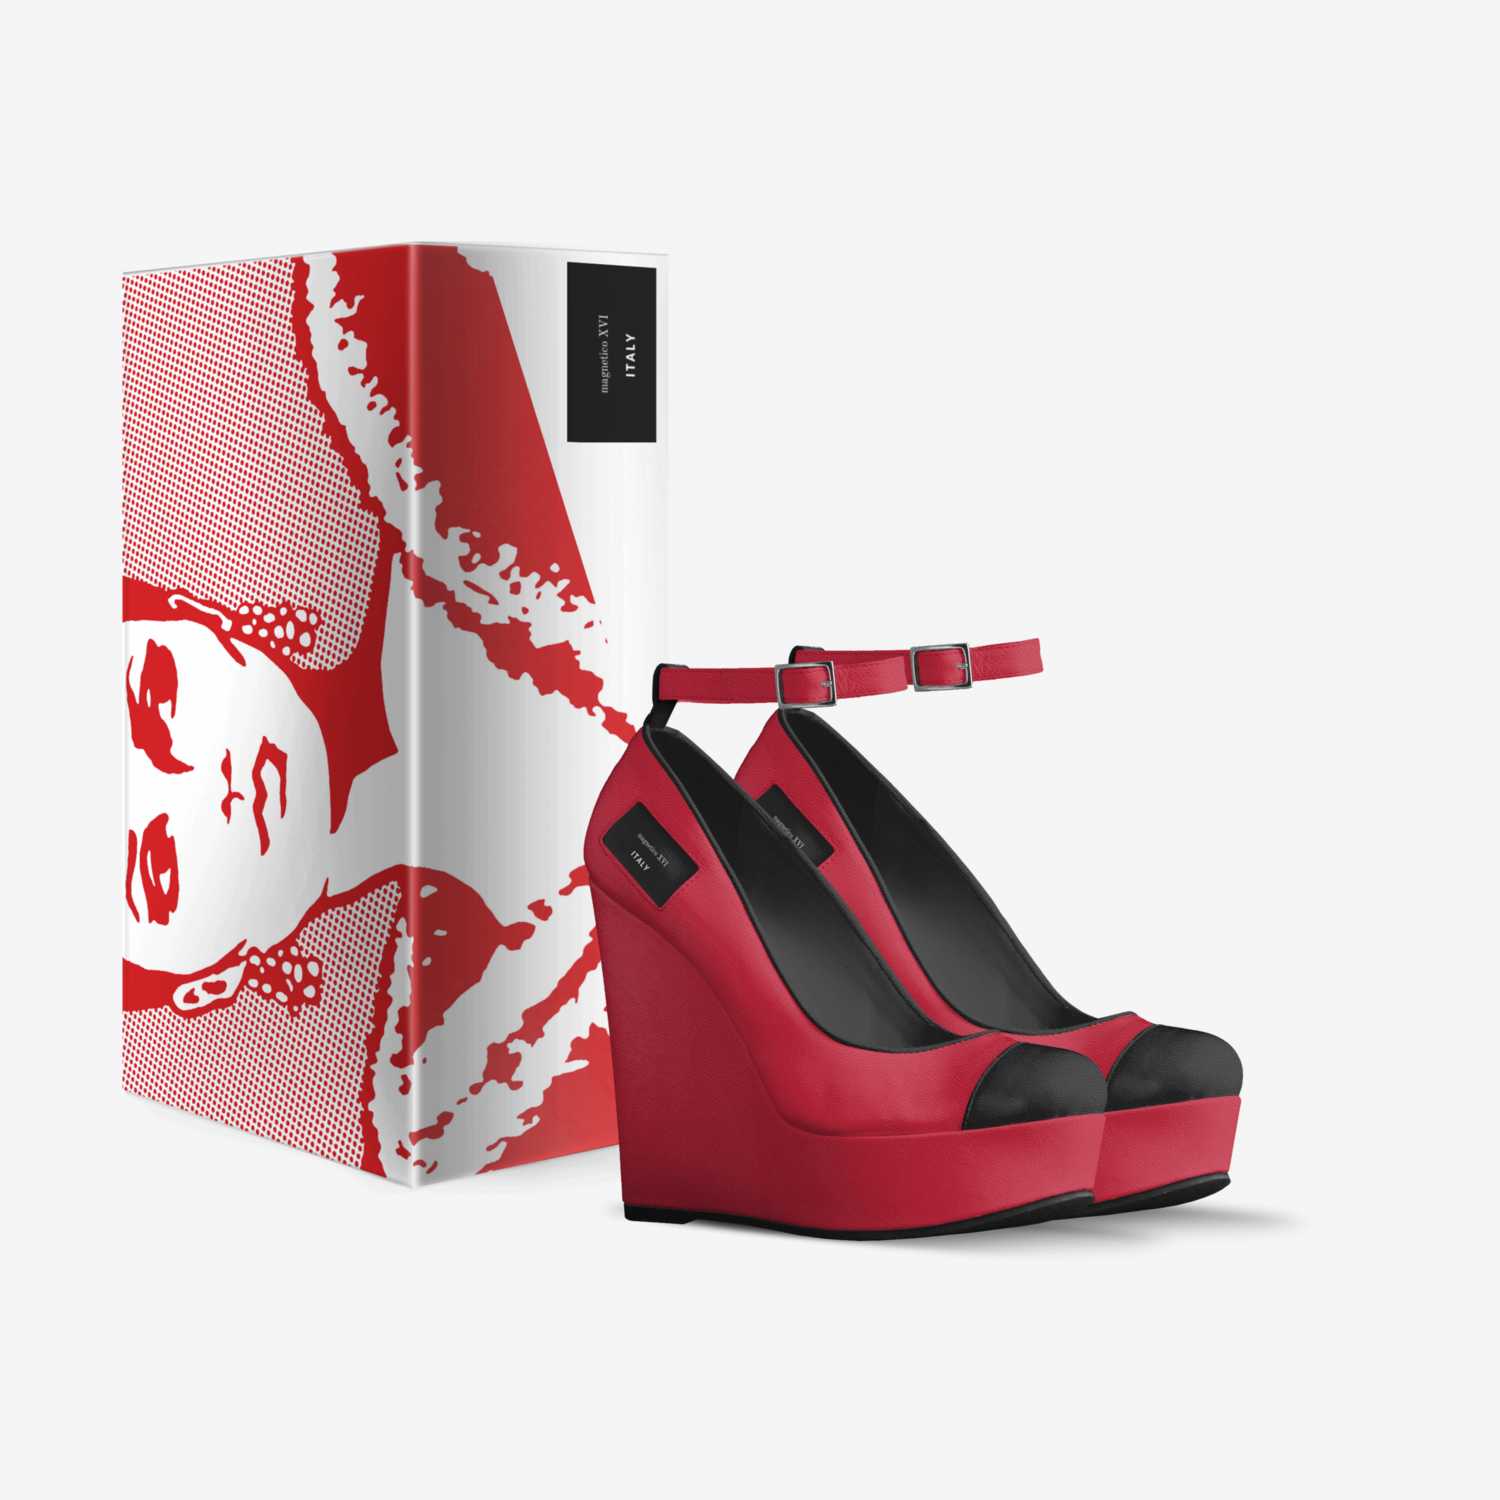 magnetico XVI REV custom made in Italy shoes by Jesús Sandoval | Box view